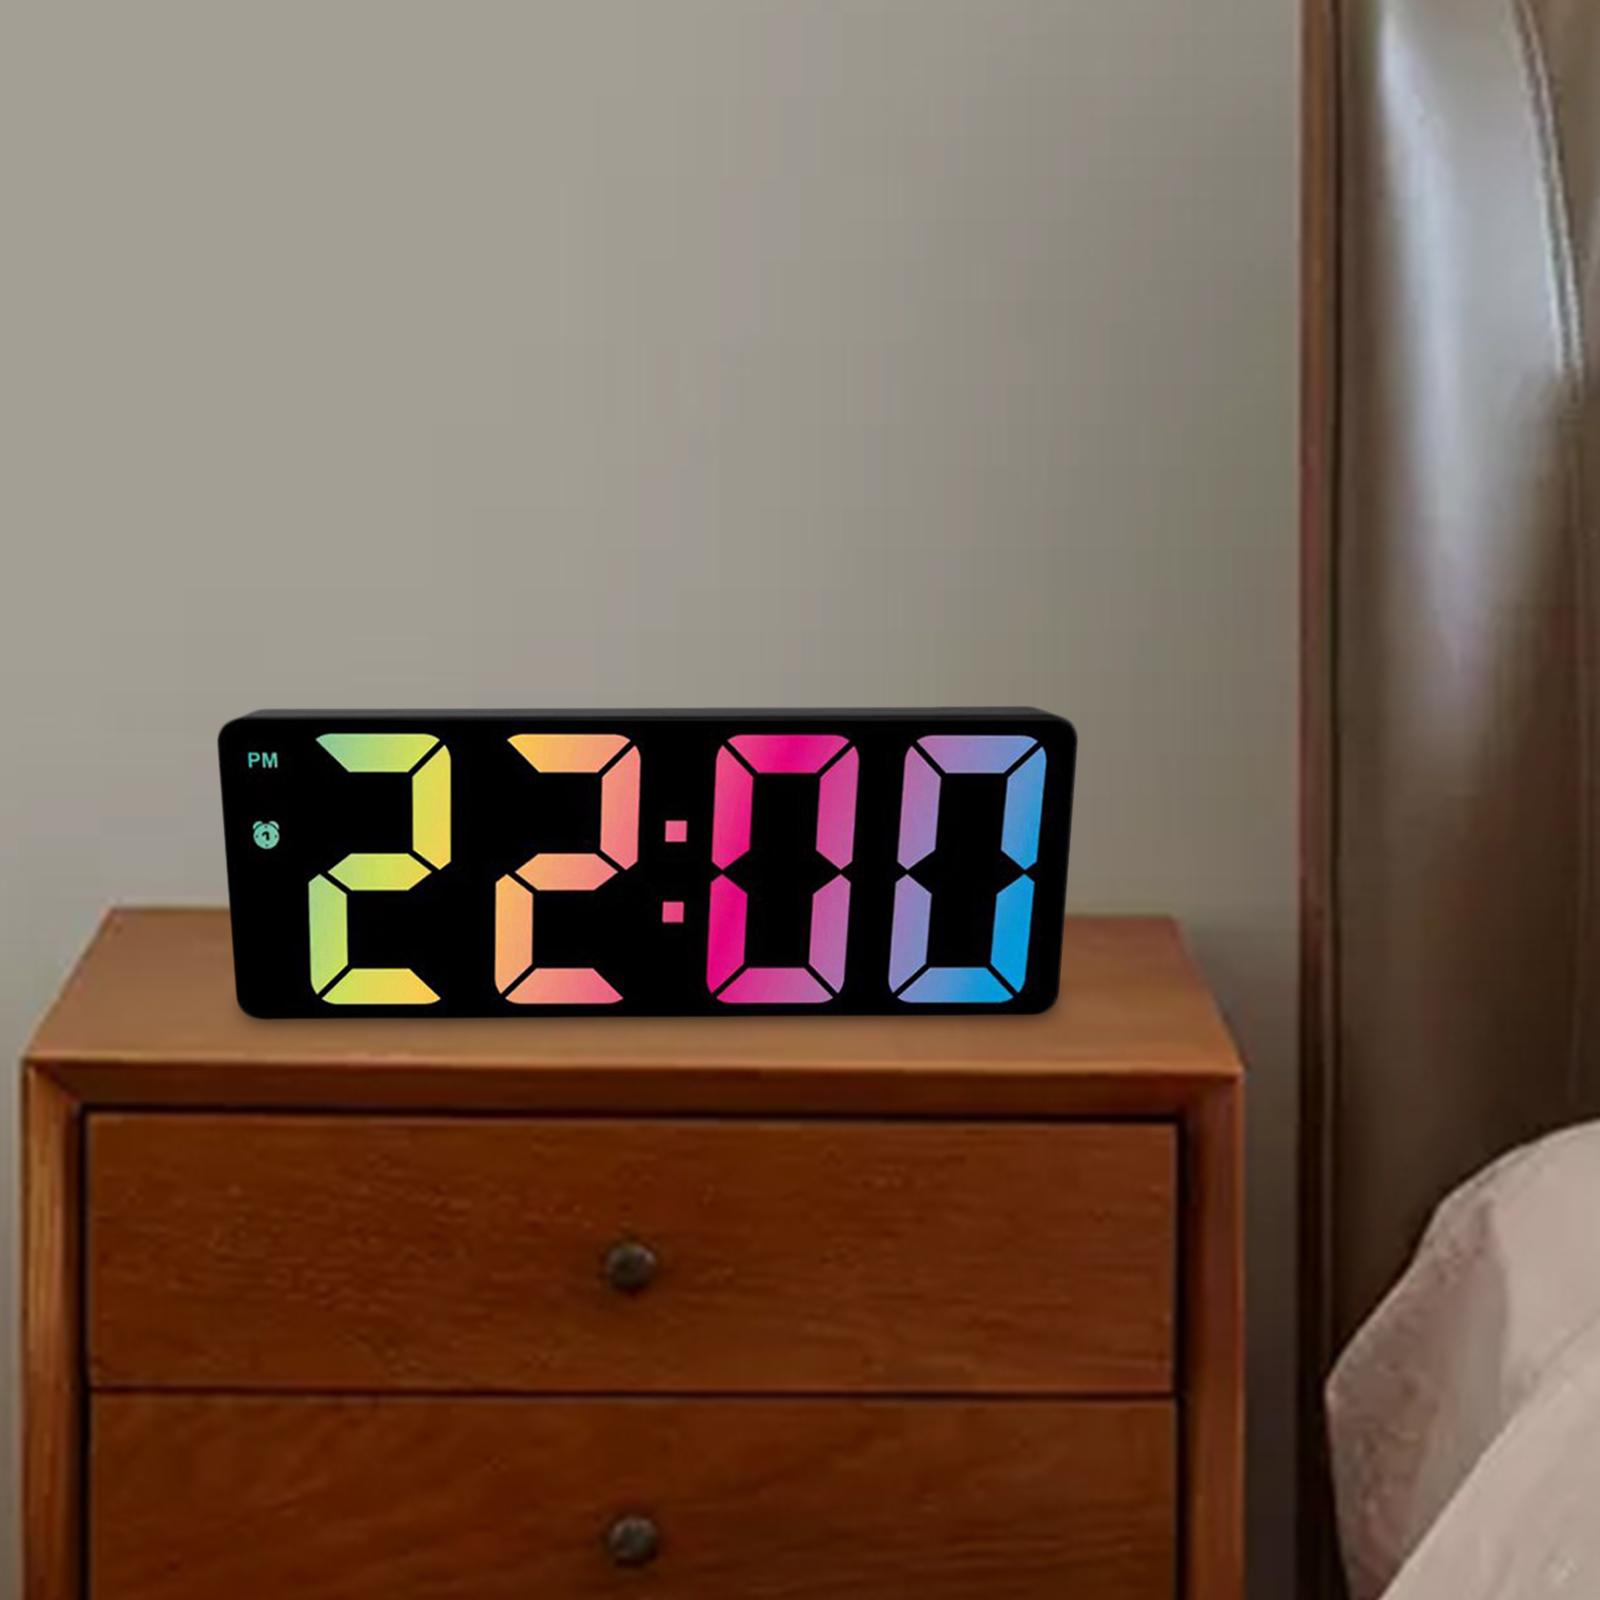 Colorful Alarm Clock Large Number Table Bedside Seniors Dimmer Battery StyleC